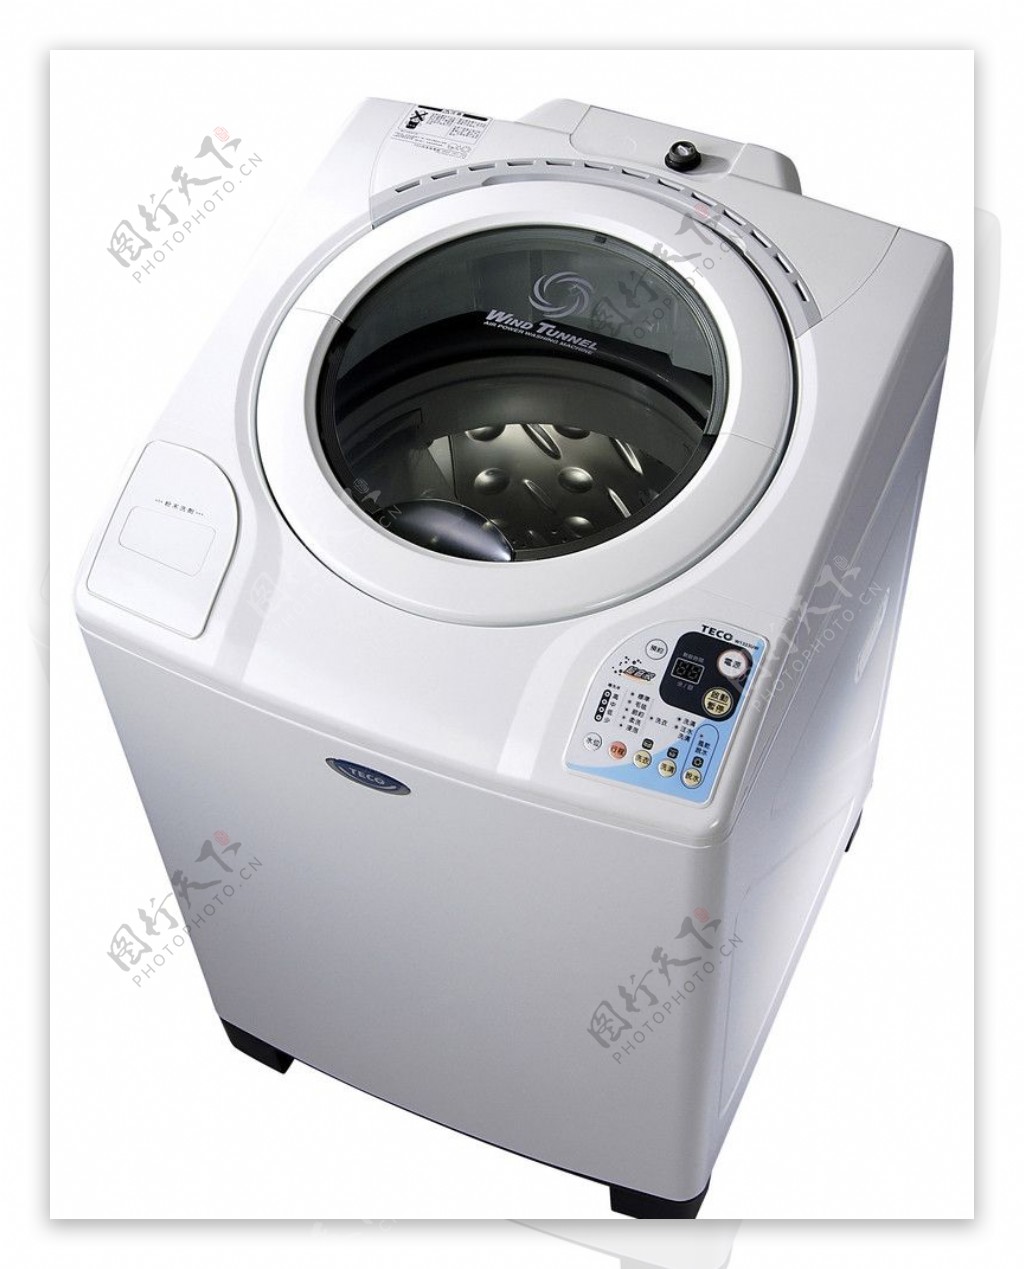 TECO超音波全自动洗衣机图片